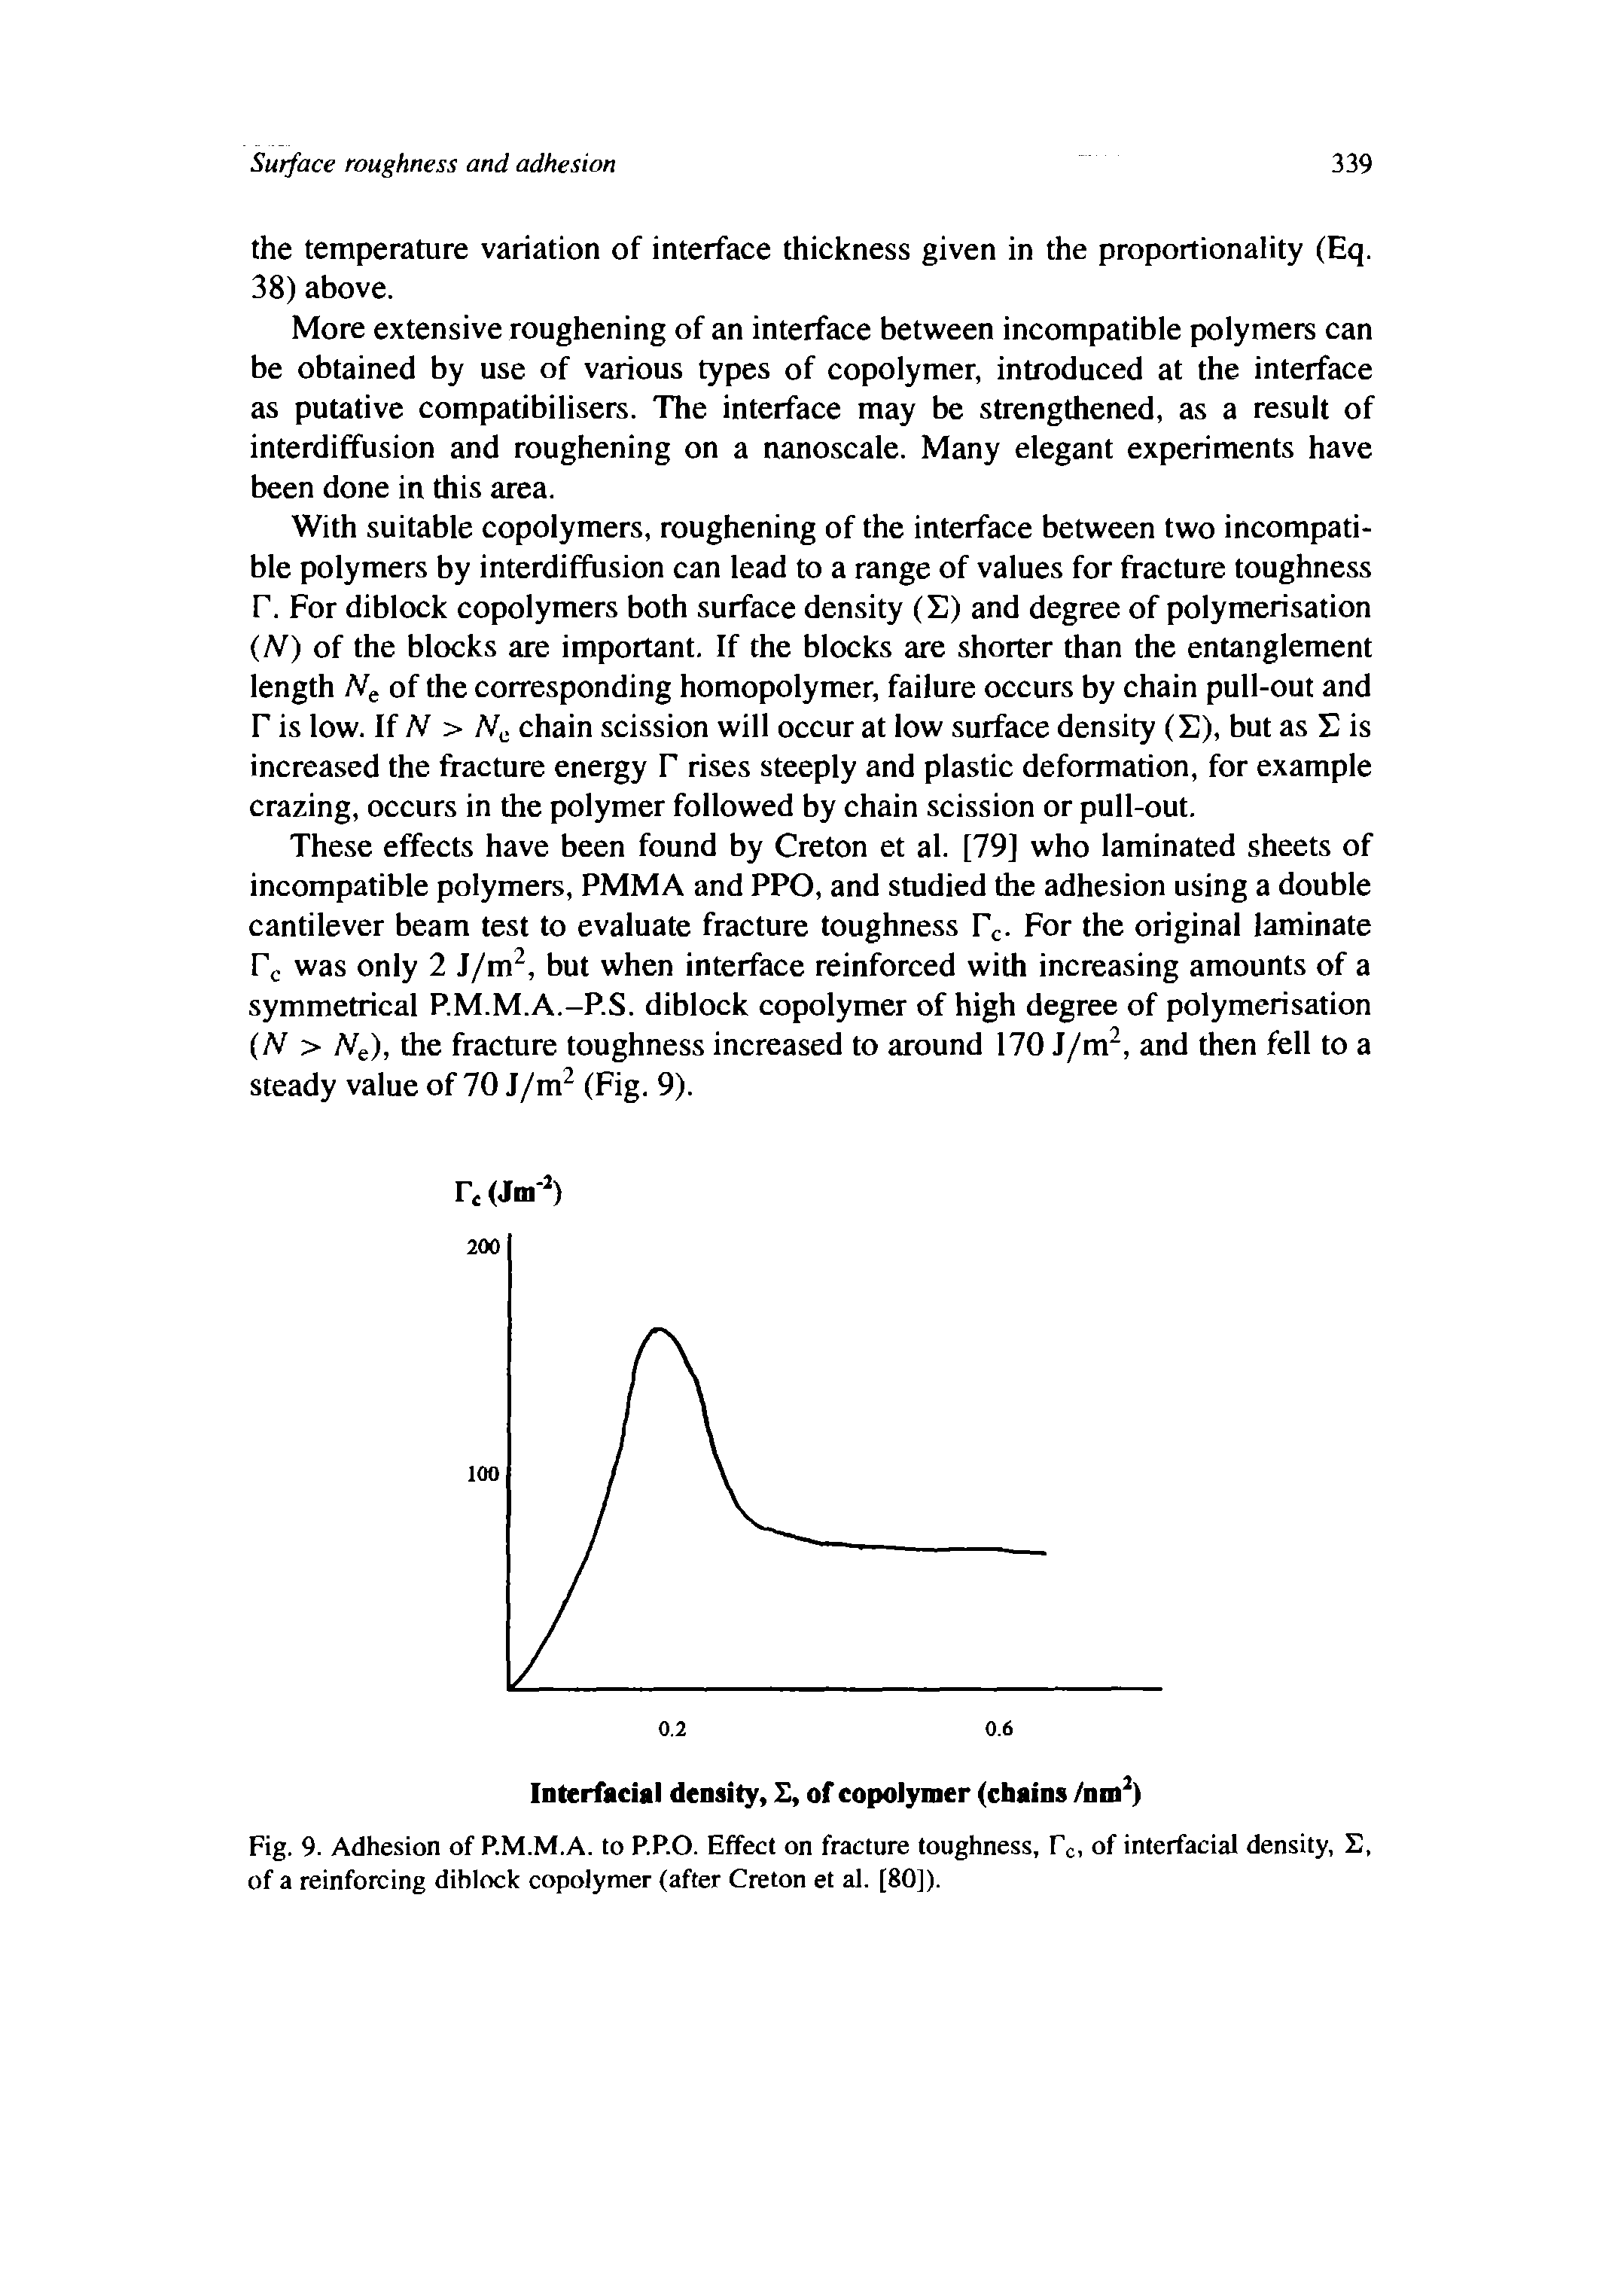 Fig. 9. Adhesion of P.M.M.A. to P.P.O. Effect on fracture toughness, Fc, of interfacial density, E, of a reinforcing dihlock copolymer (after Creton et al. [80]).